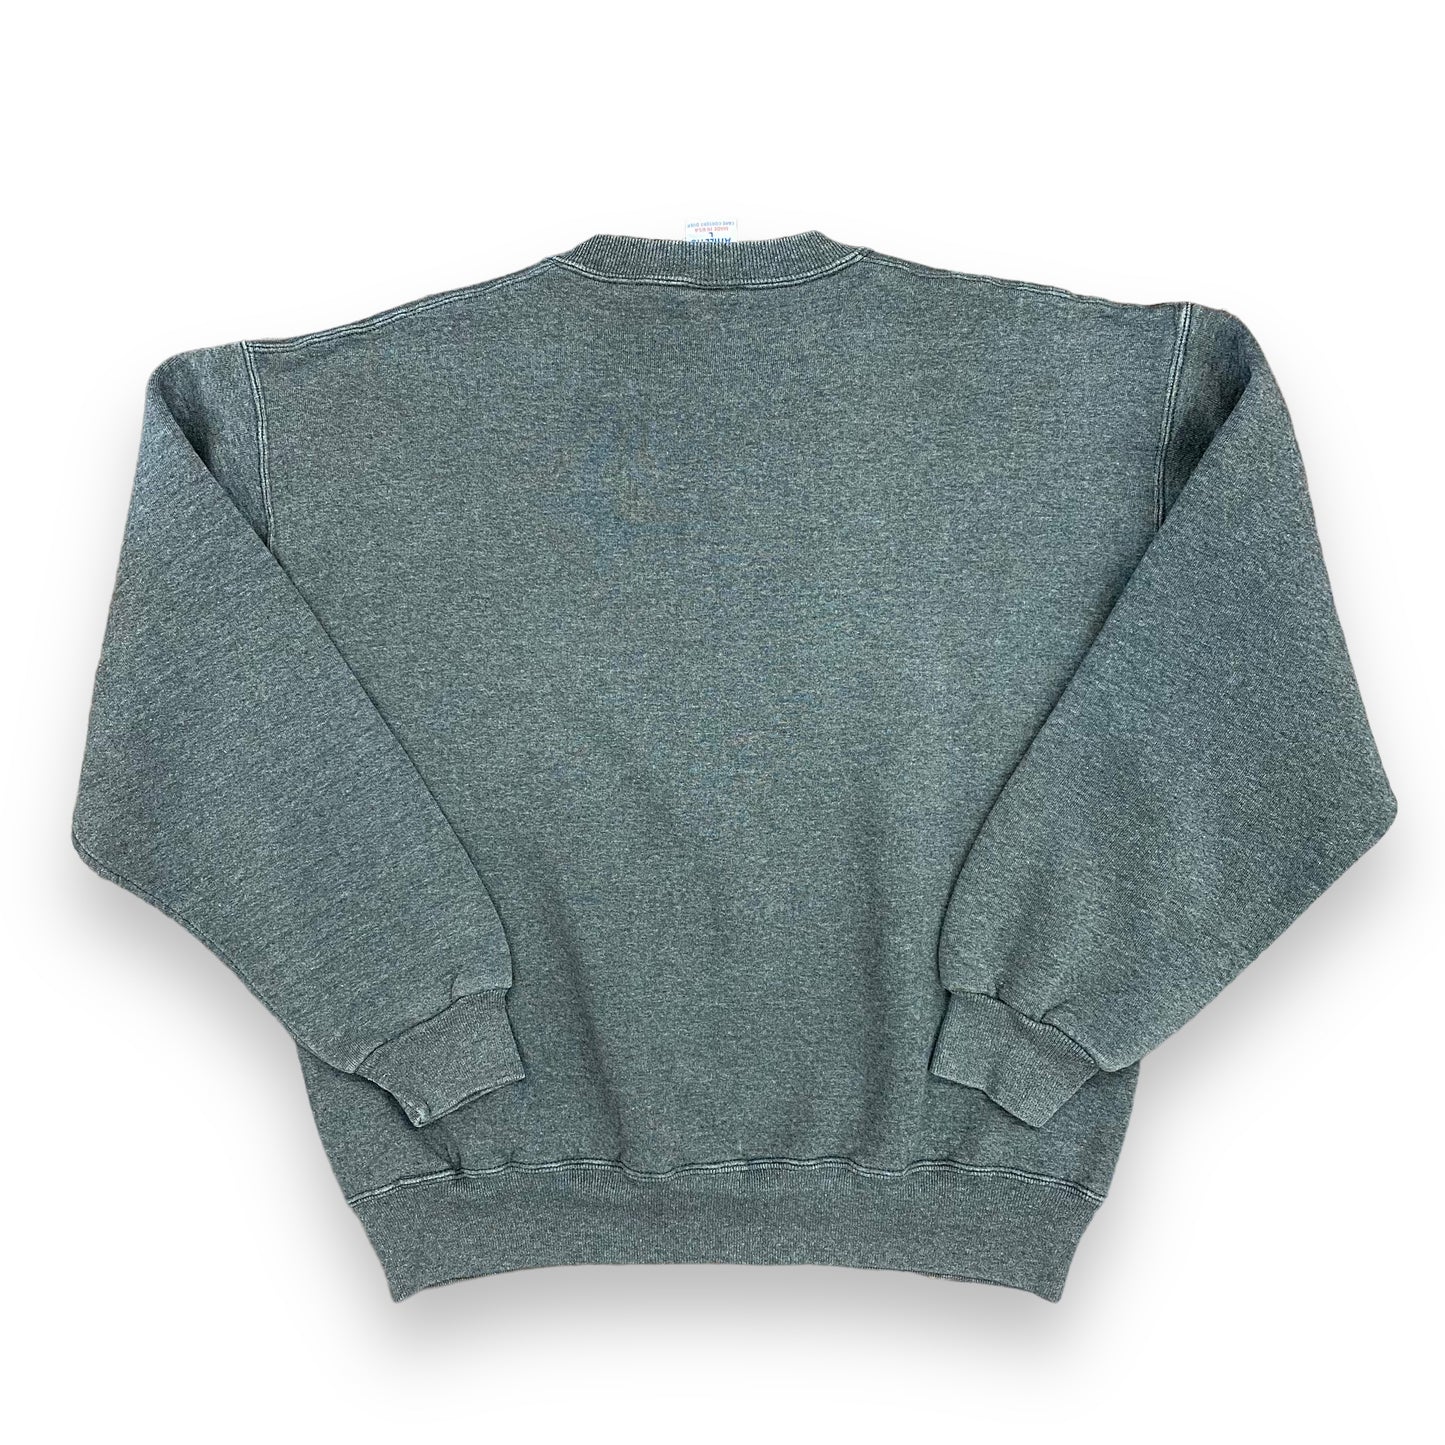 Vintage 1990s Siena College Crewneck Sweatshirt - Size Large